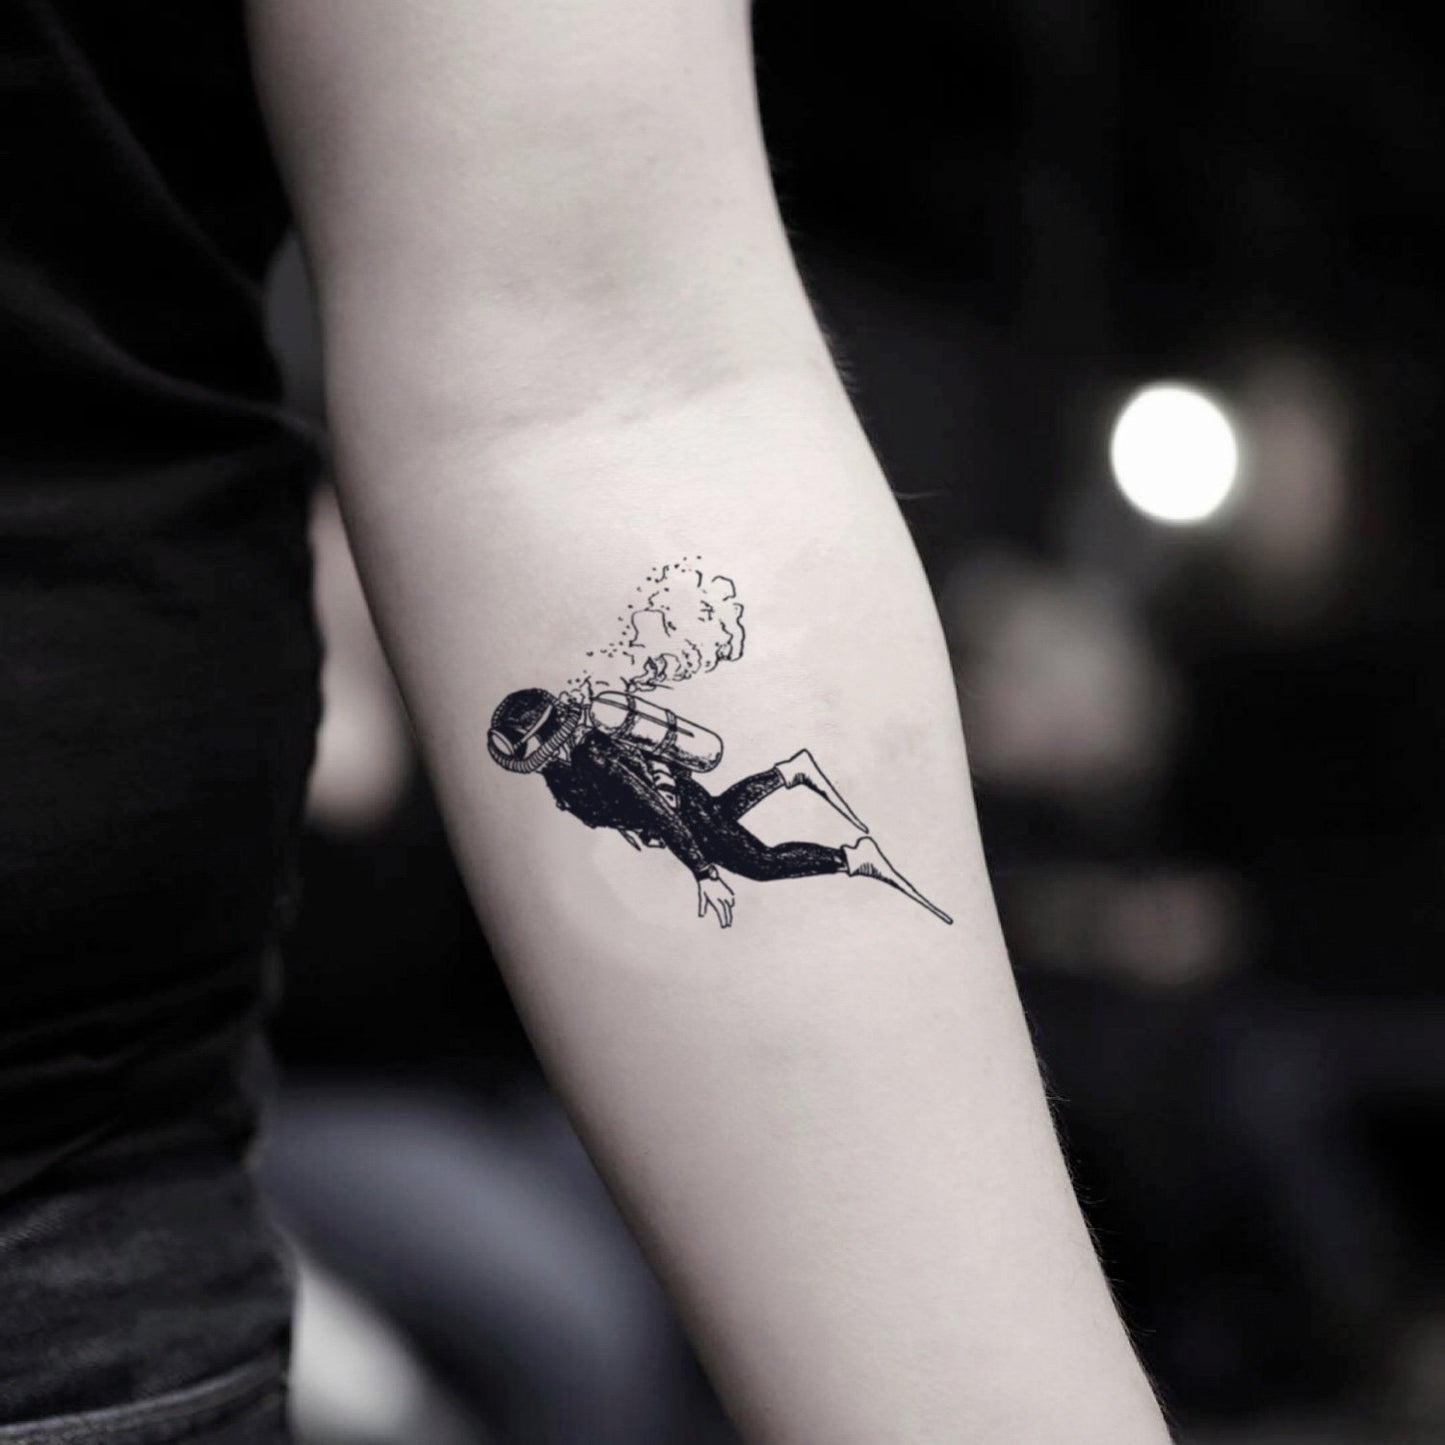 fake small skin deep sea scuba diver illustrative temporary tattoo sticker design idea on inner arm